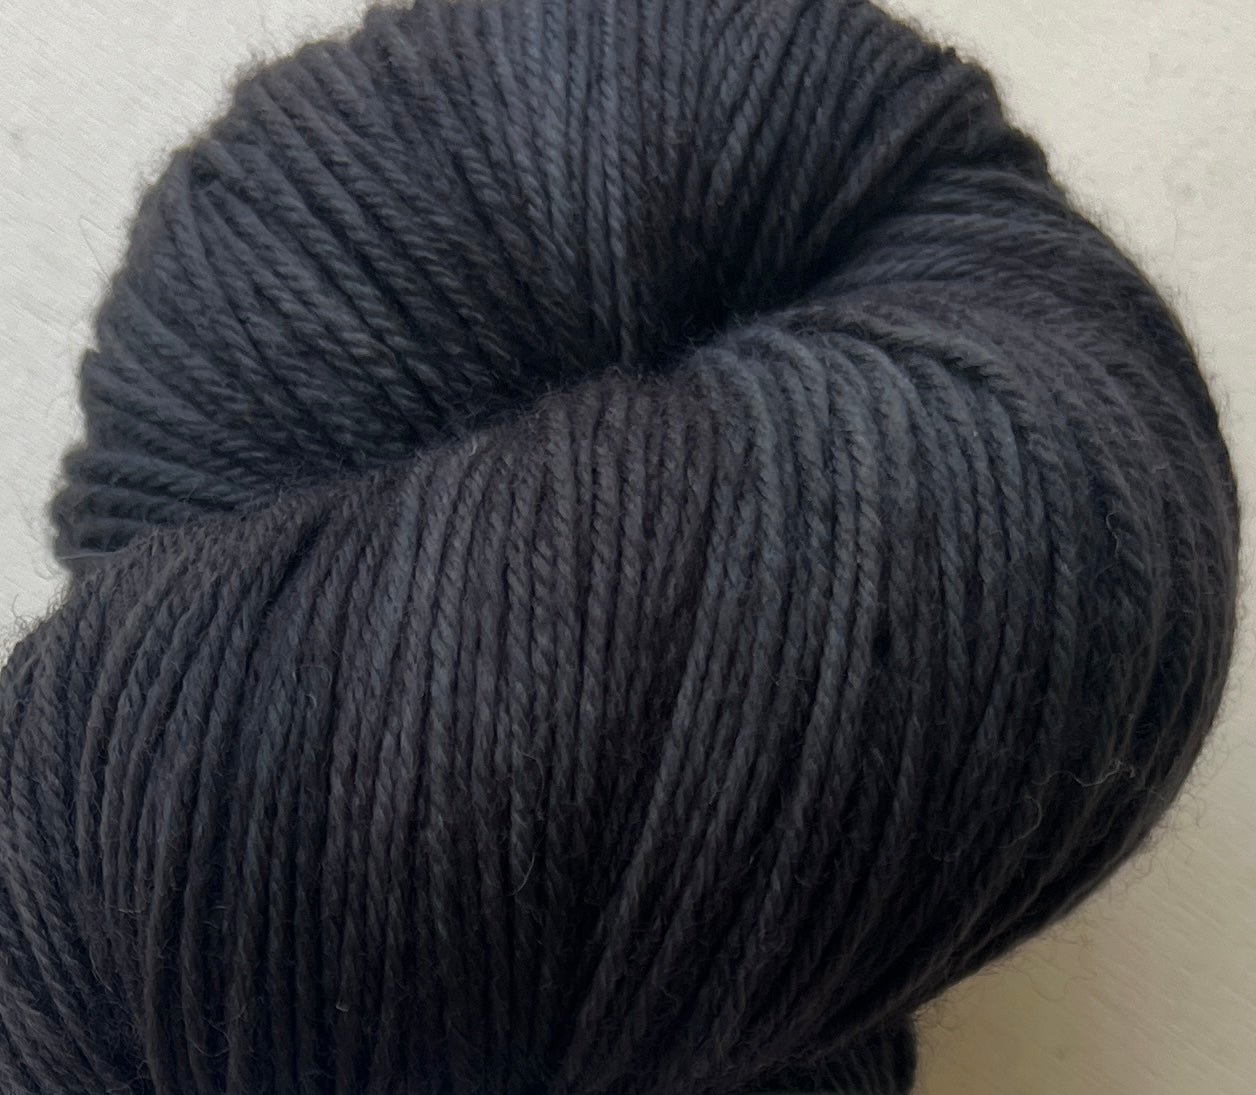 Black Licorice Hand Dyed Yarn